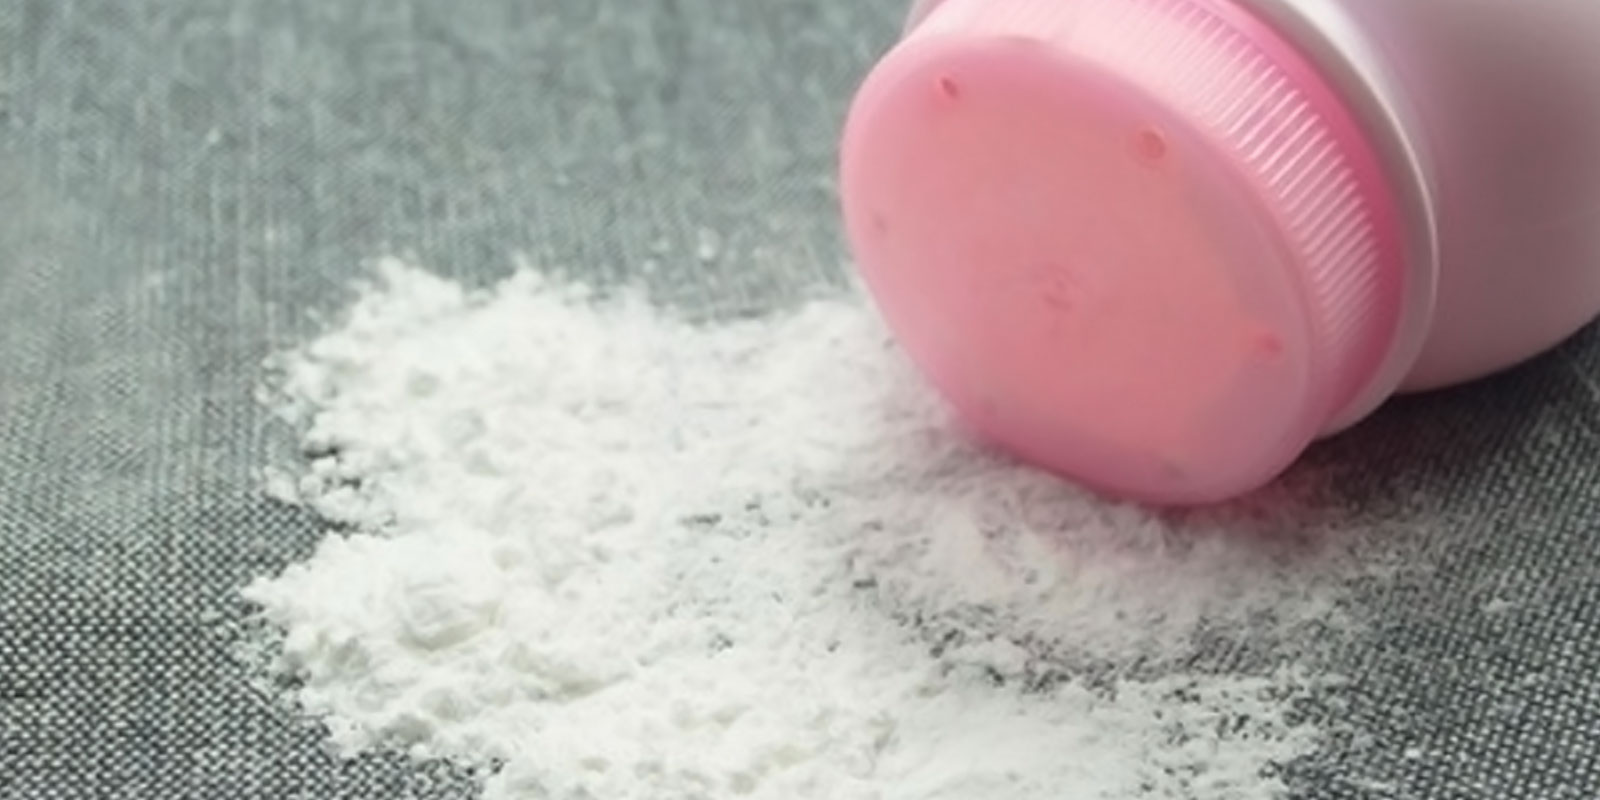 Safer alternatives to cancer-causing talcum powder